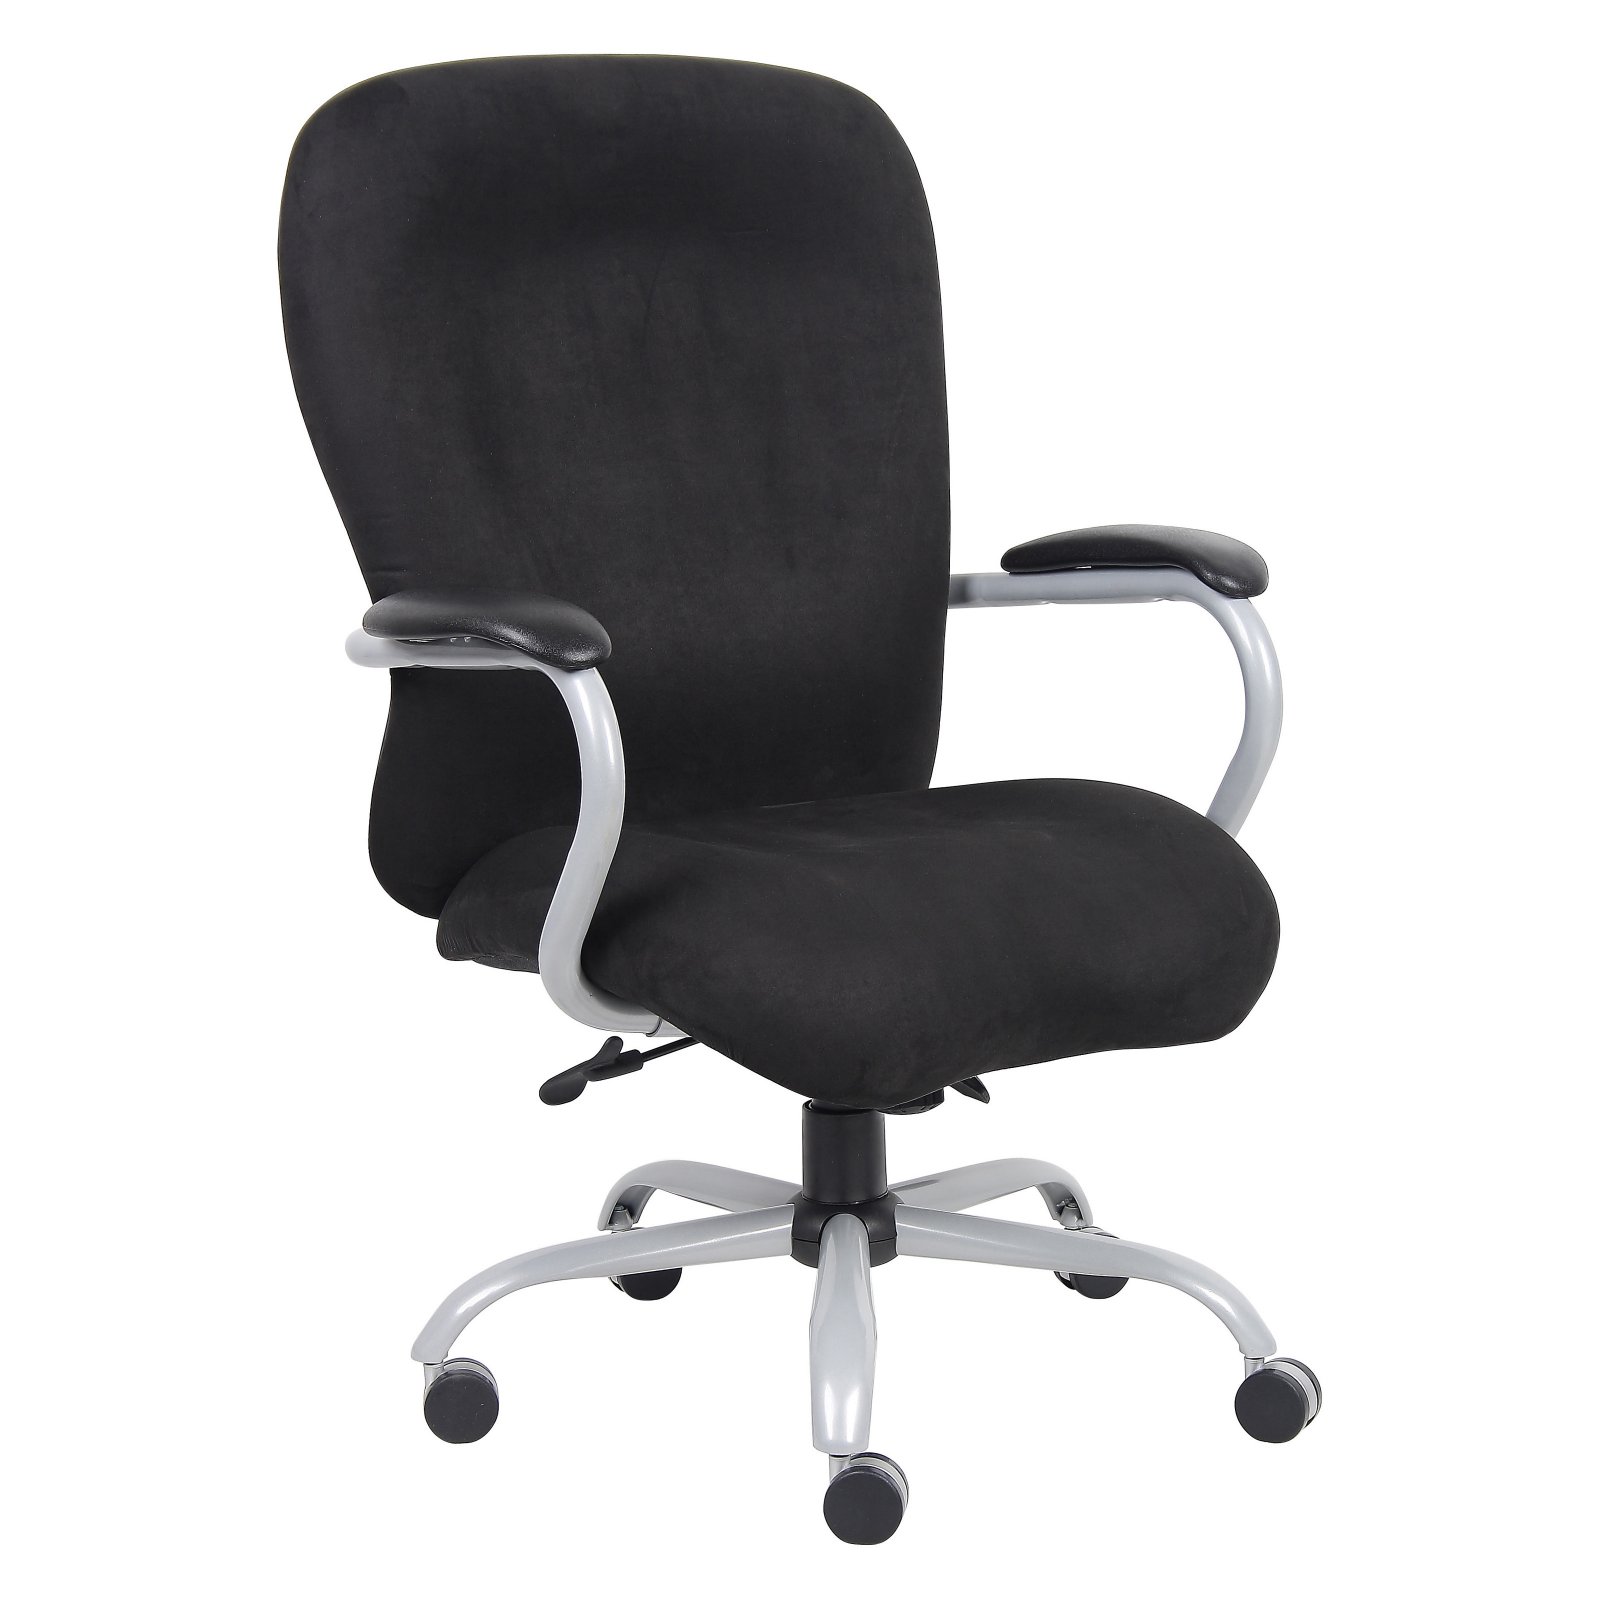 Boss Office & Home Big Man's Microfiber 350-lb. Capacity Office Chair, Black - image 1 of 3